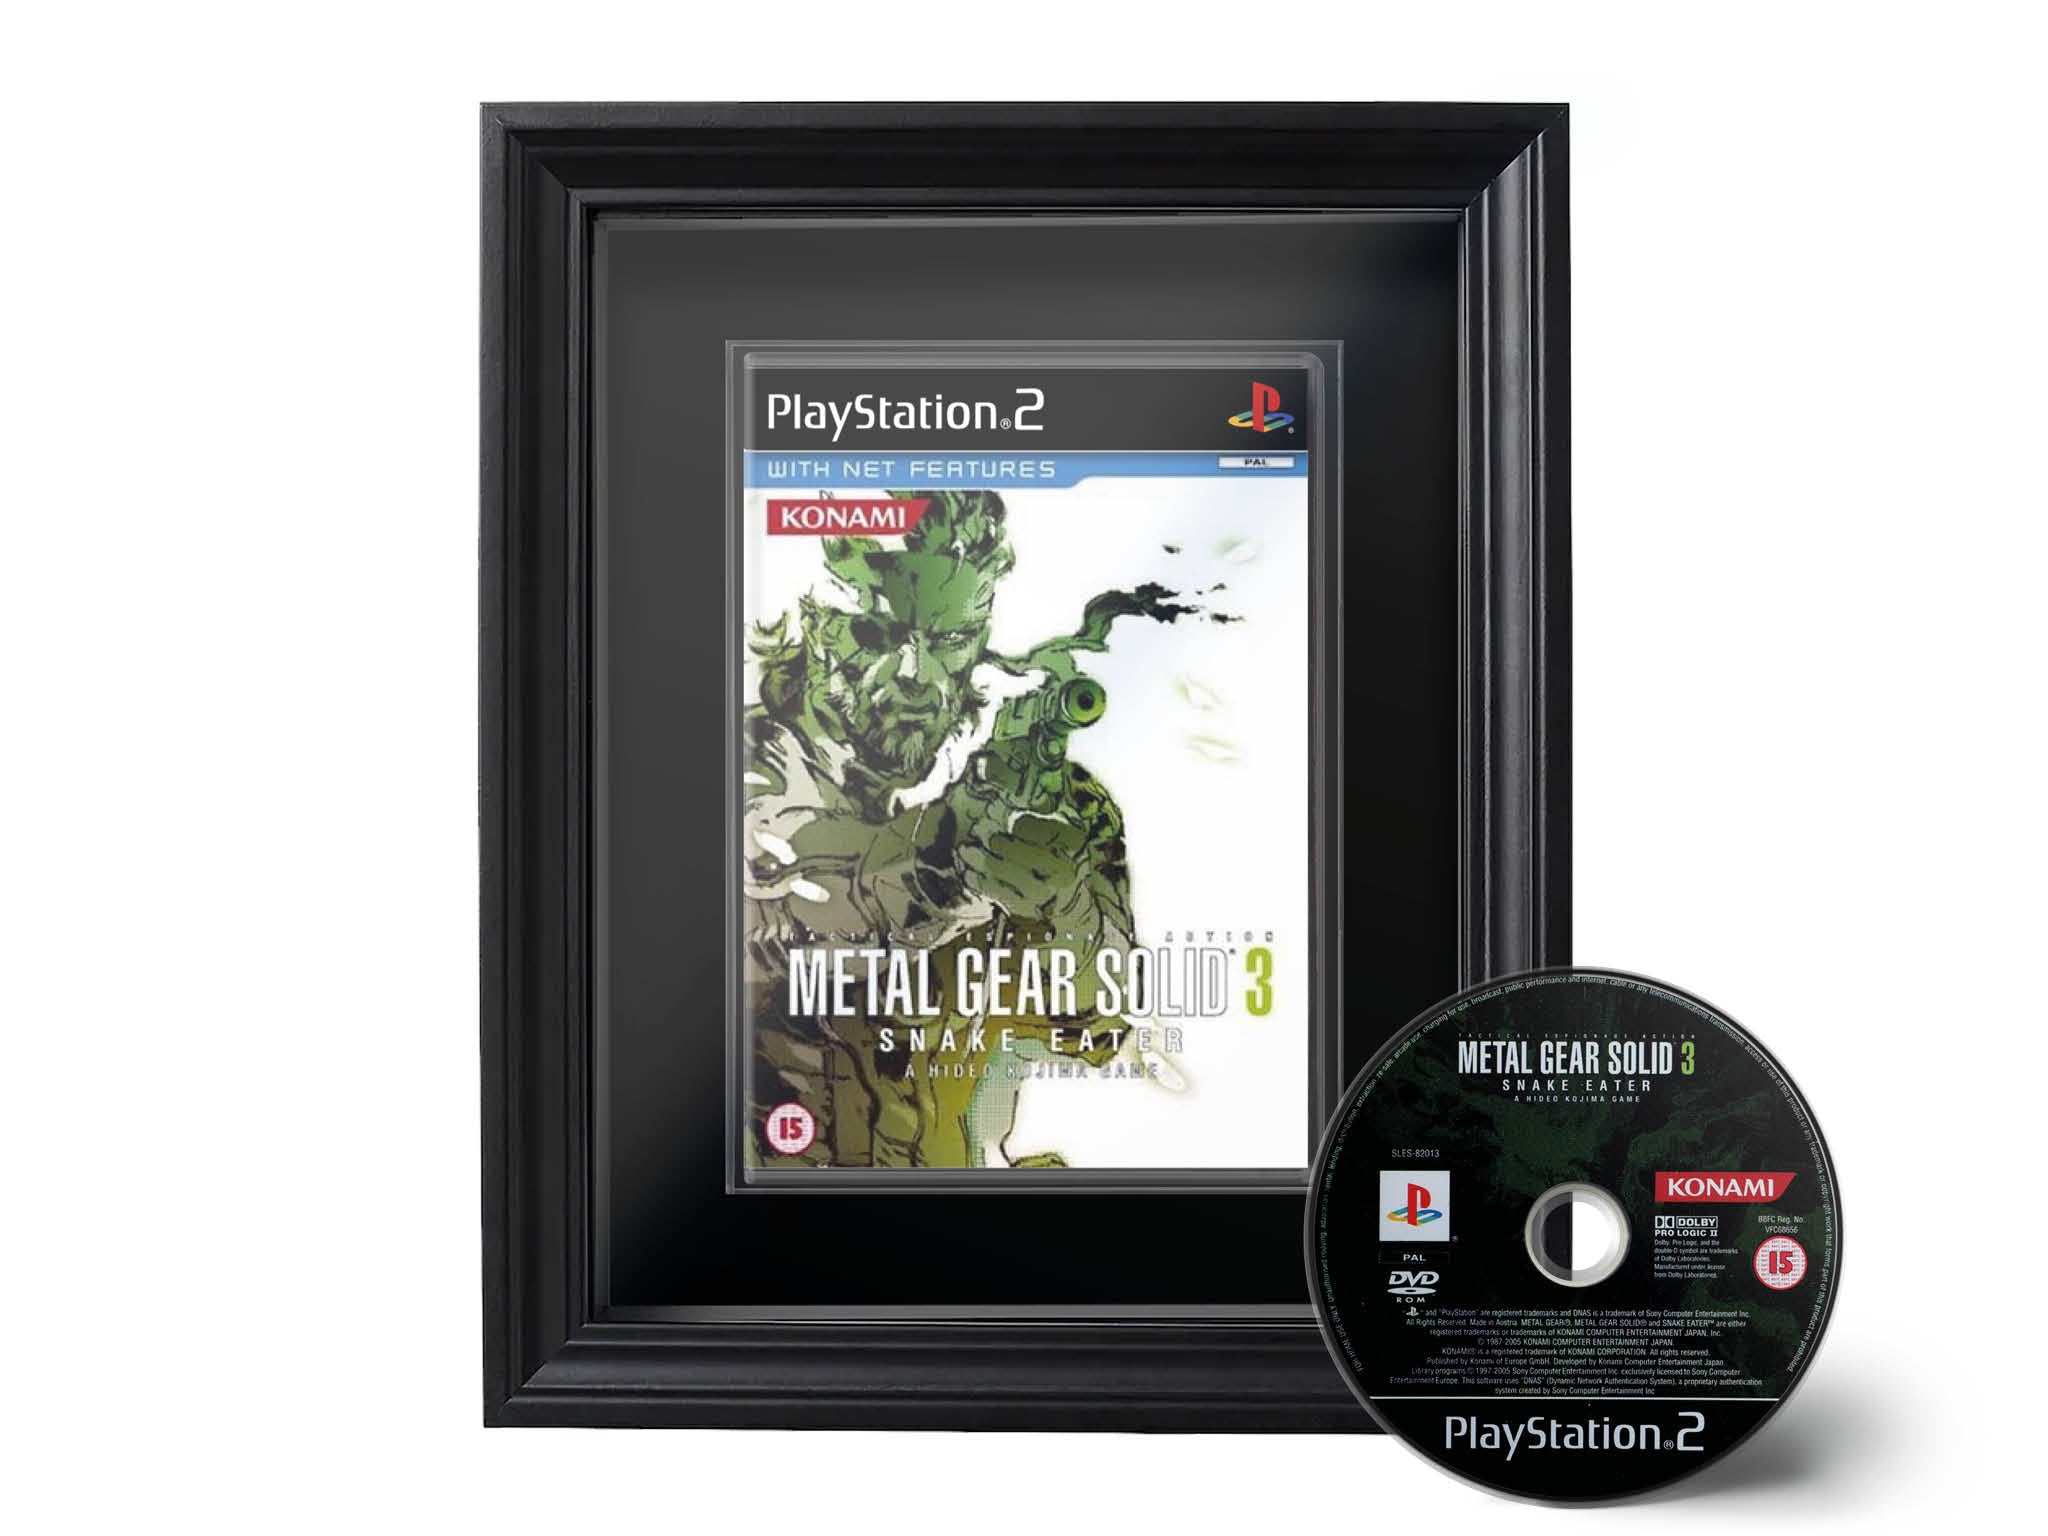 Metal Gear Solid 3 (Showcase Range) Framed Game - Frame-A-Game